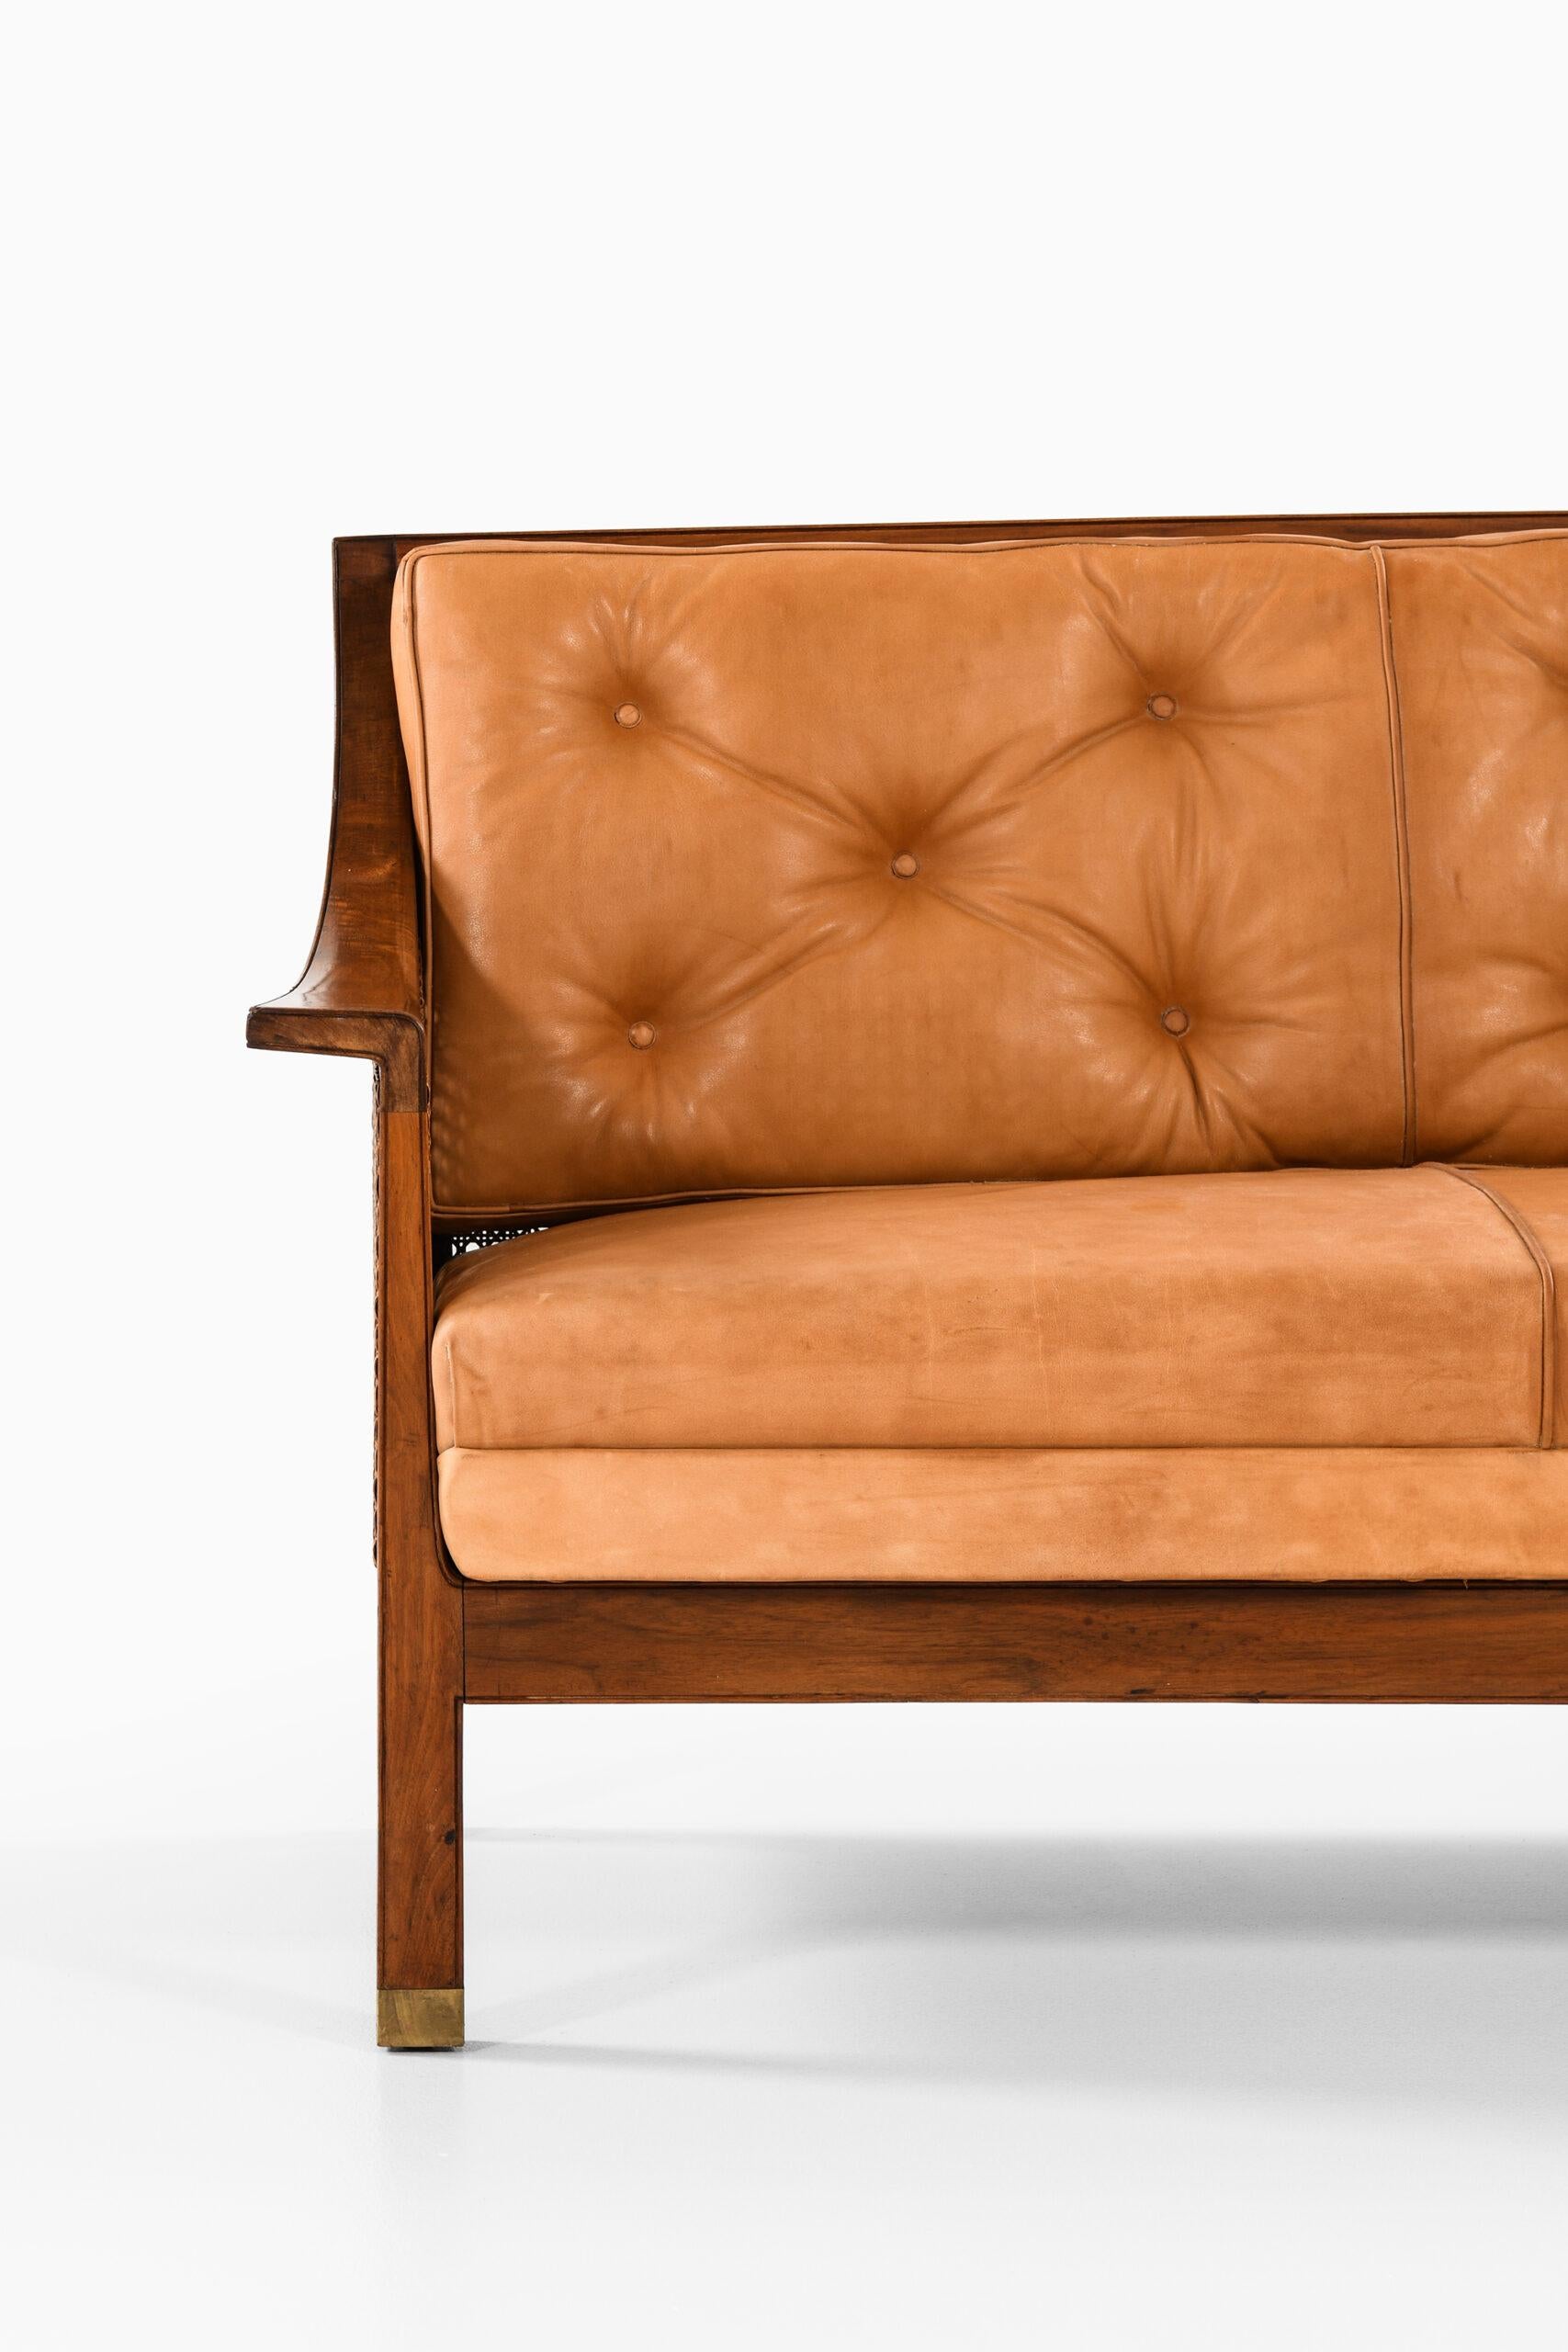 Scandinavian Modern Arne Jacobsen Sofa Produced by Cabinetmaker Otto Meyer in Denmark For Sale